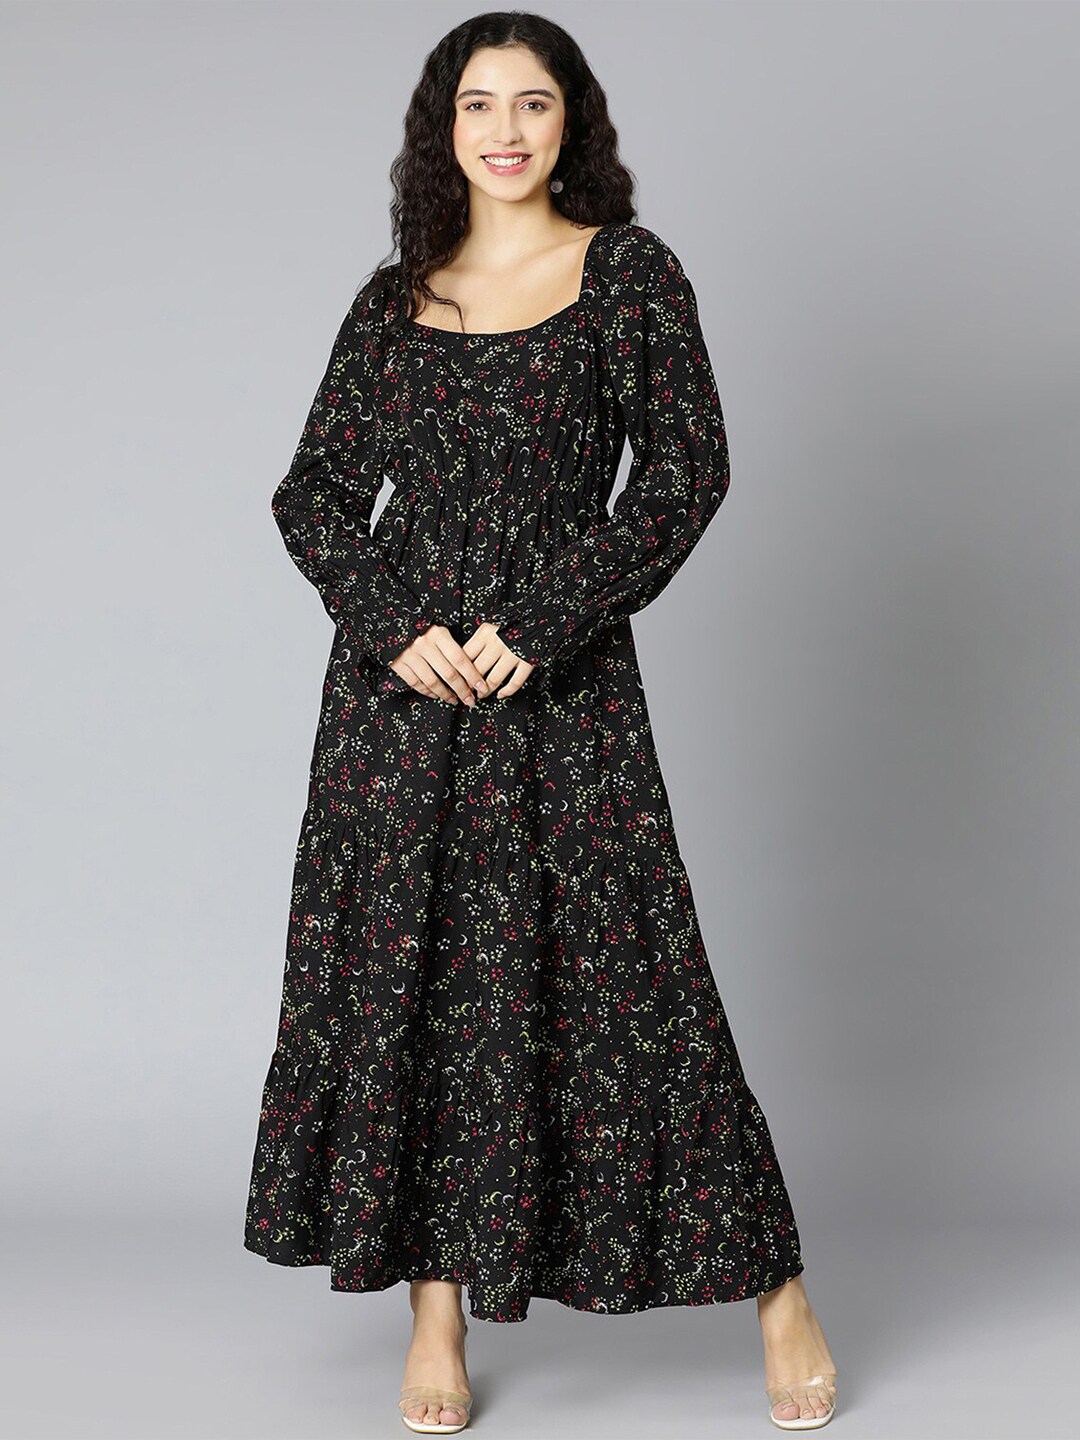 Oxolloxo Black Floral Satin Maxi Dress Price in India